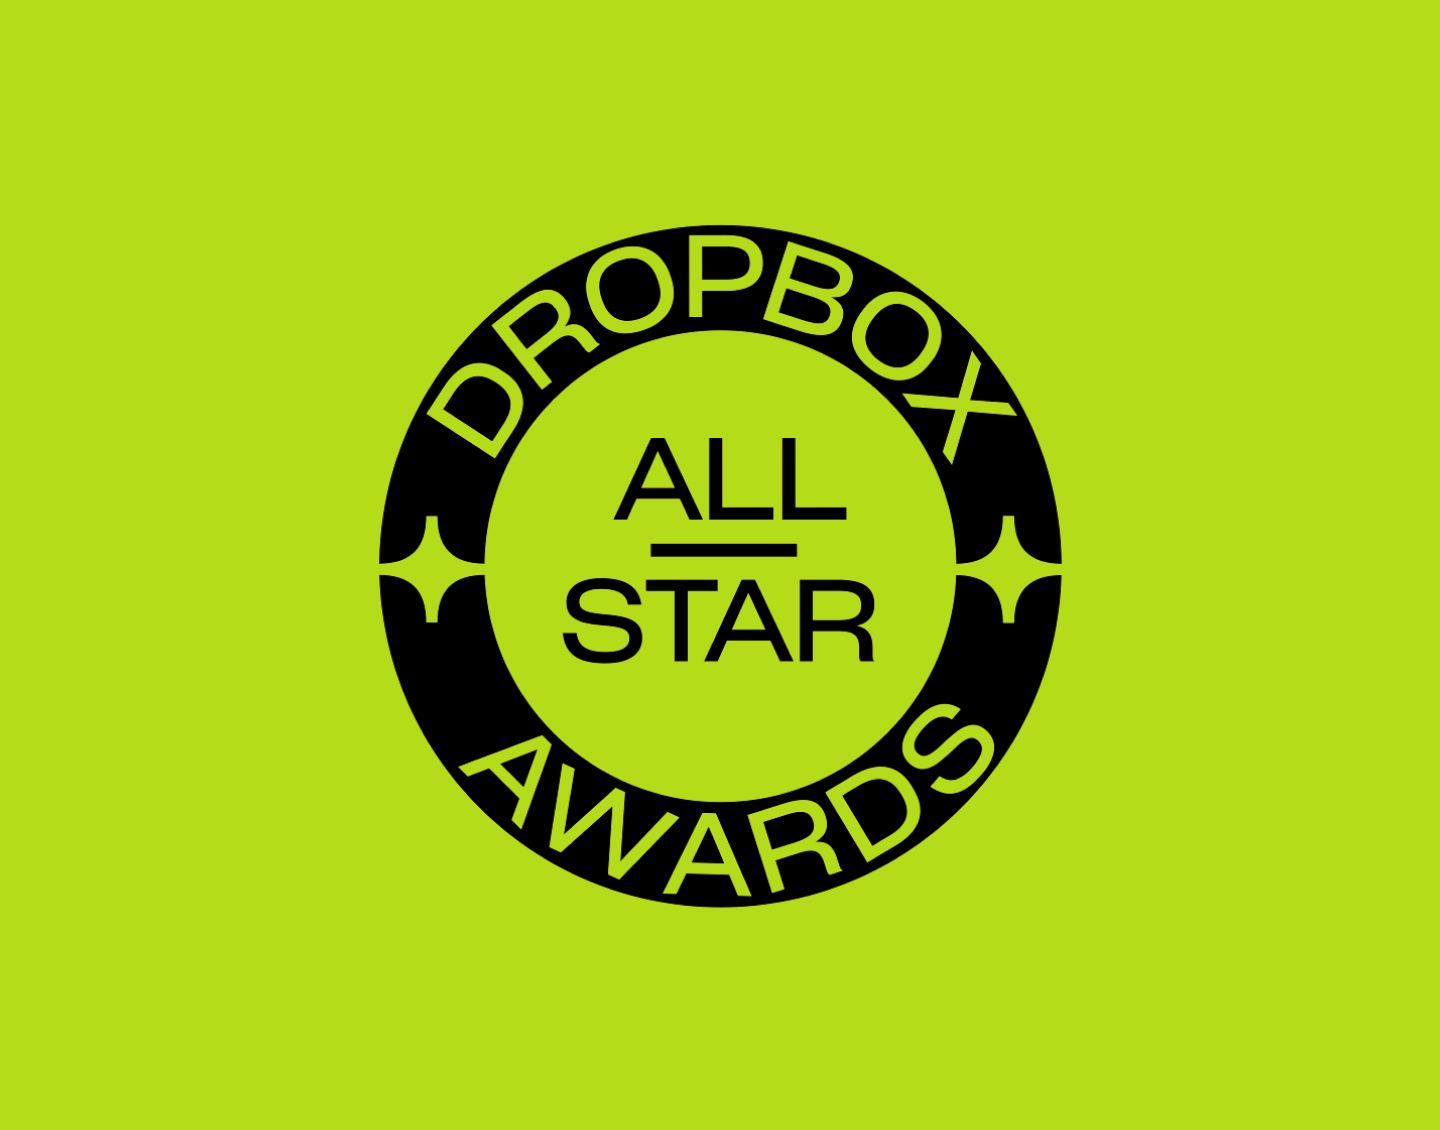 Dropbox All-Star customer awards logo